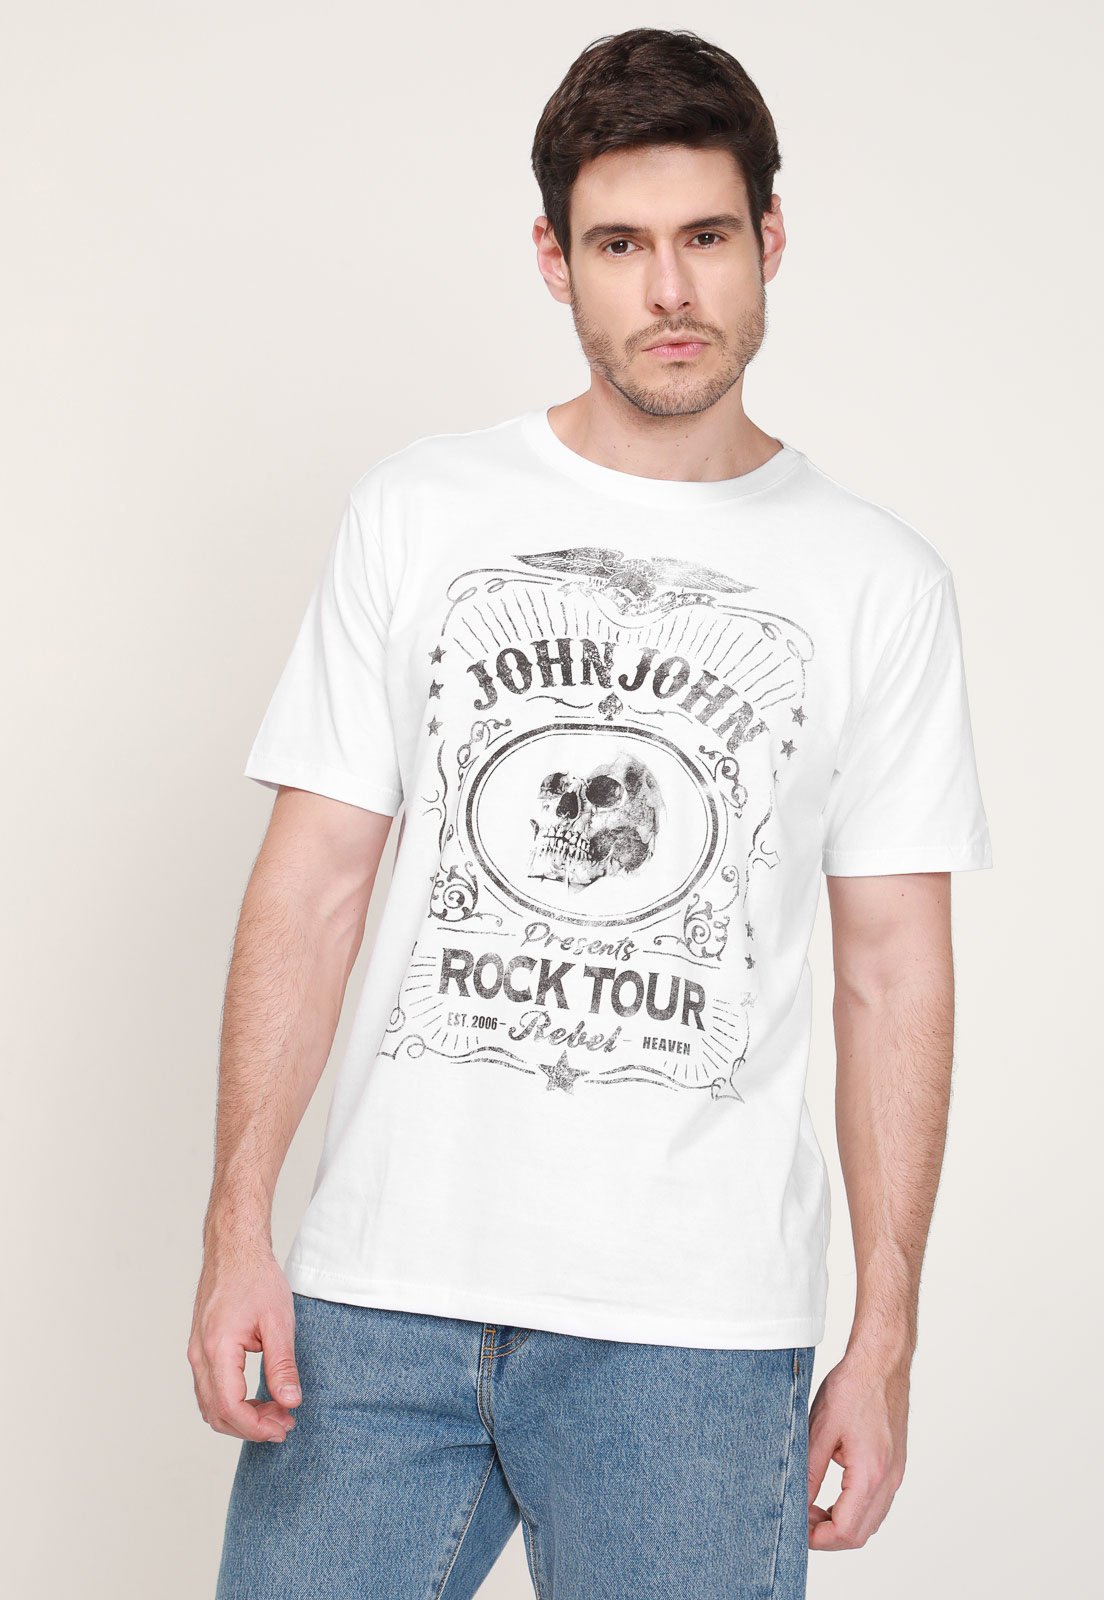 Camiseta John John Irons Branca - Compre Agora